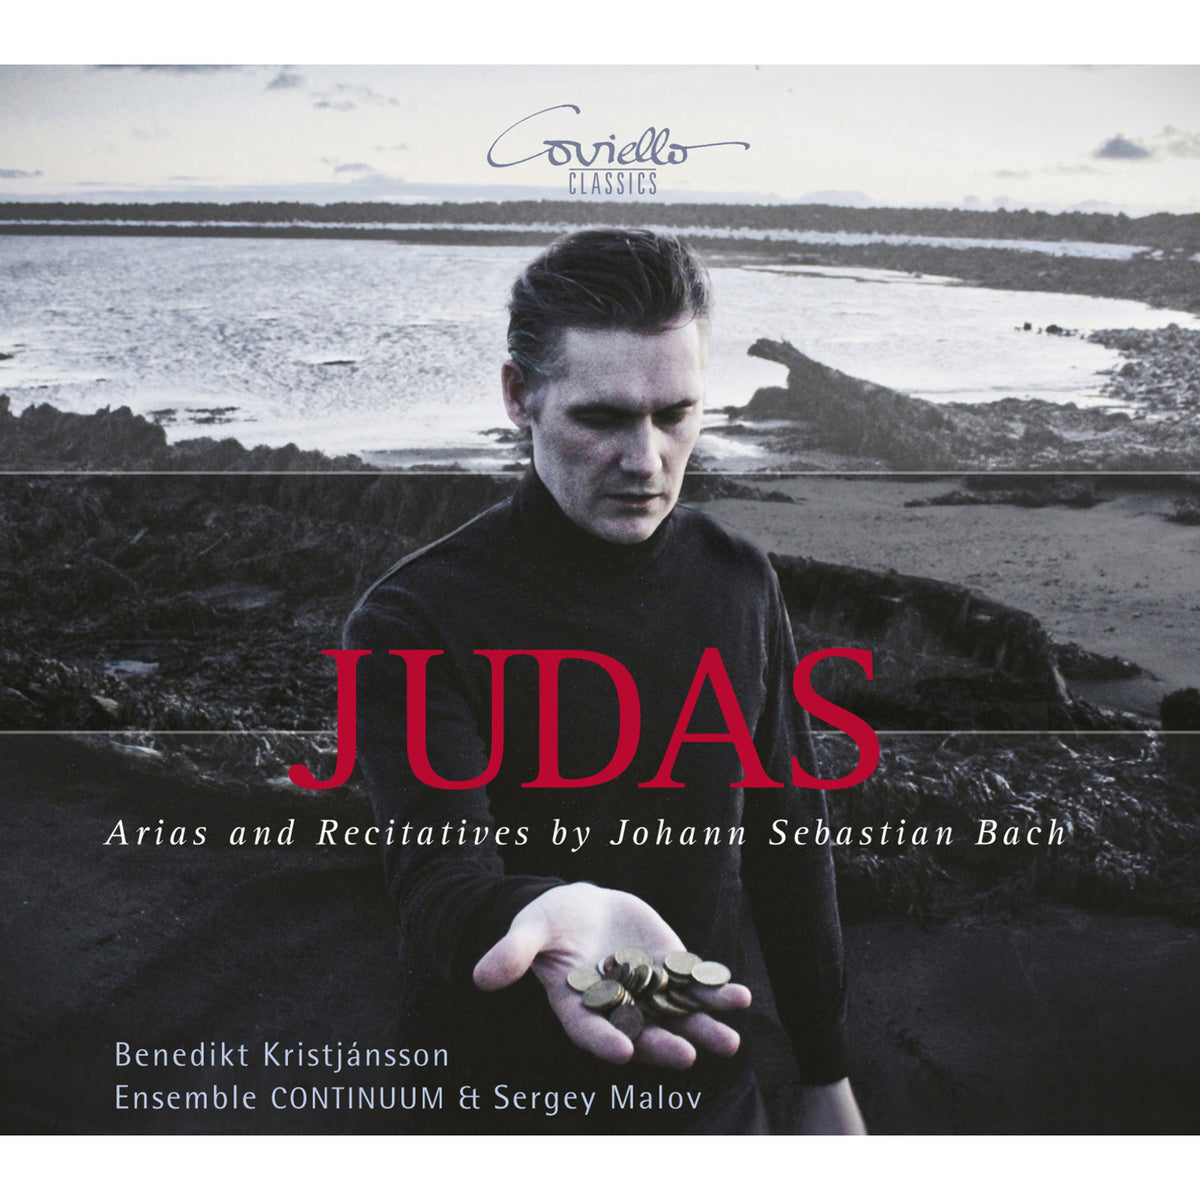 Benedikt Kristjansson, Sergey Malov, Ensemble Continuum - Judas - Arias and Recitatives by J.S. Bach